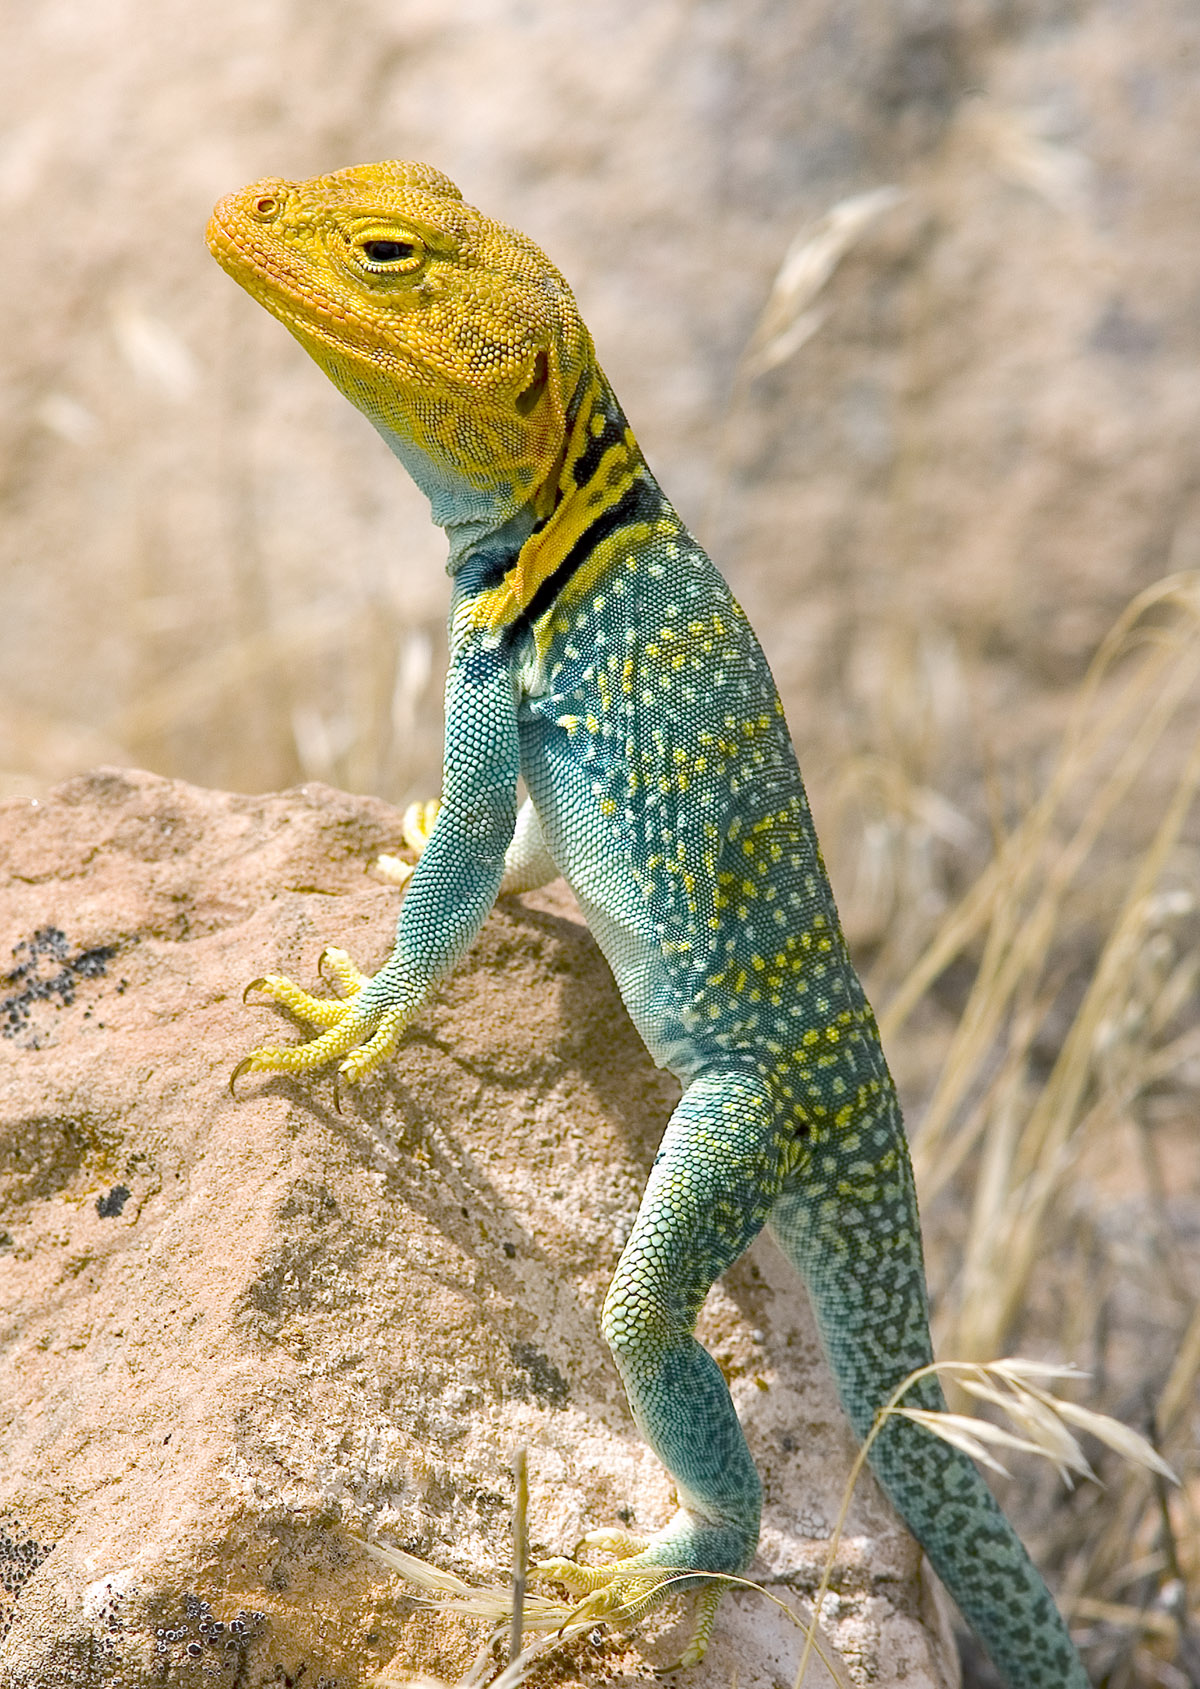 Wild lizard photo